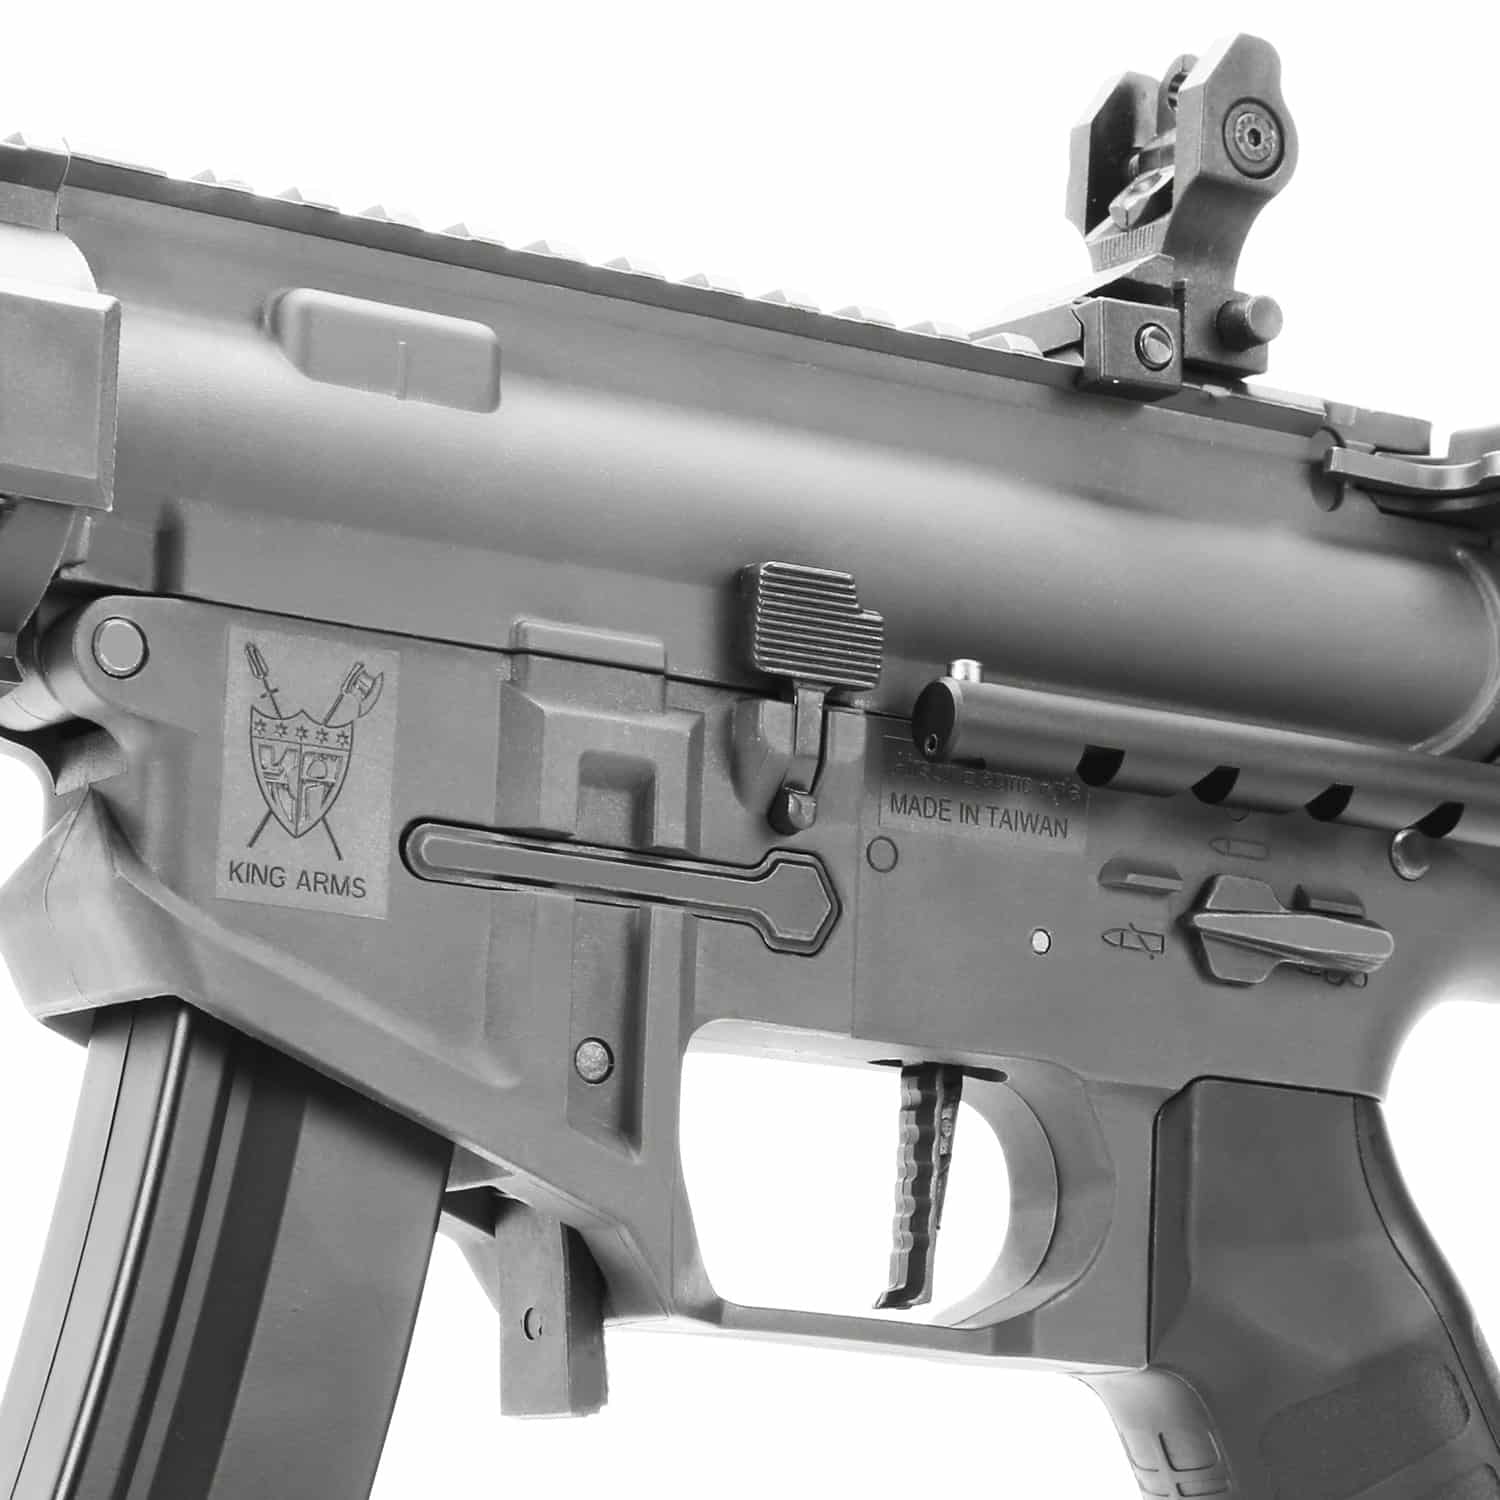 King Arms PDW 9mm SBR Shorty - Gun Metal Grey